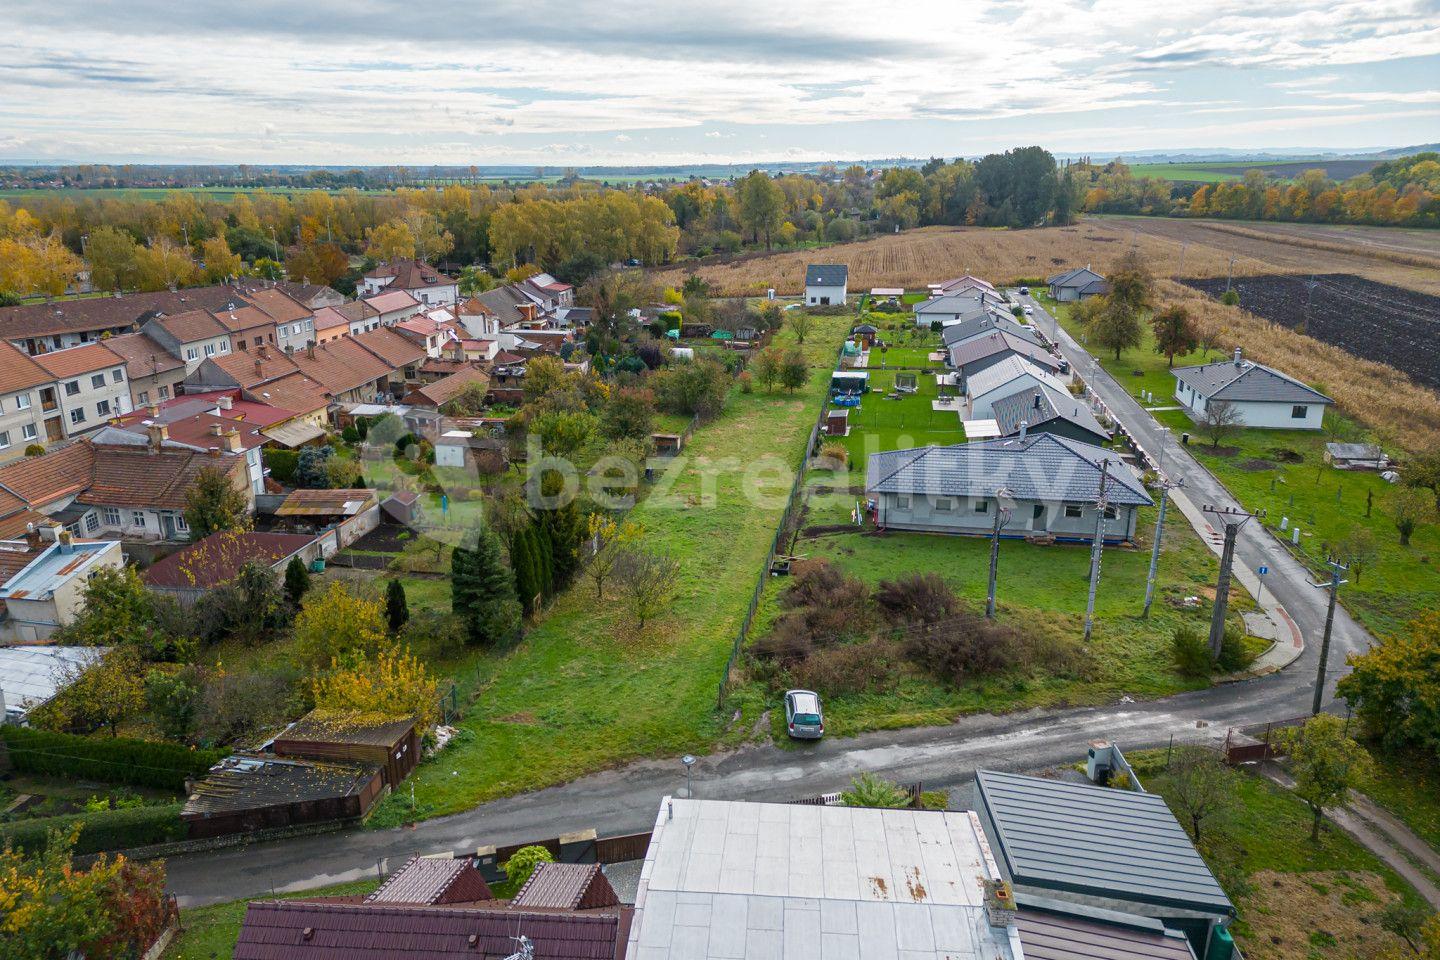 Predaj pozemku 1.503 m², Bedihošť, Olomoucký kraj